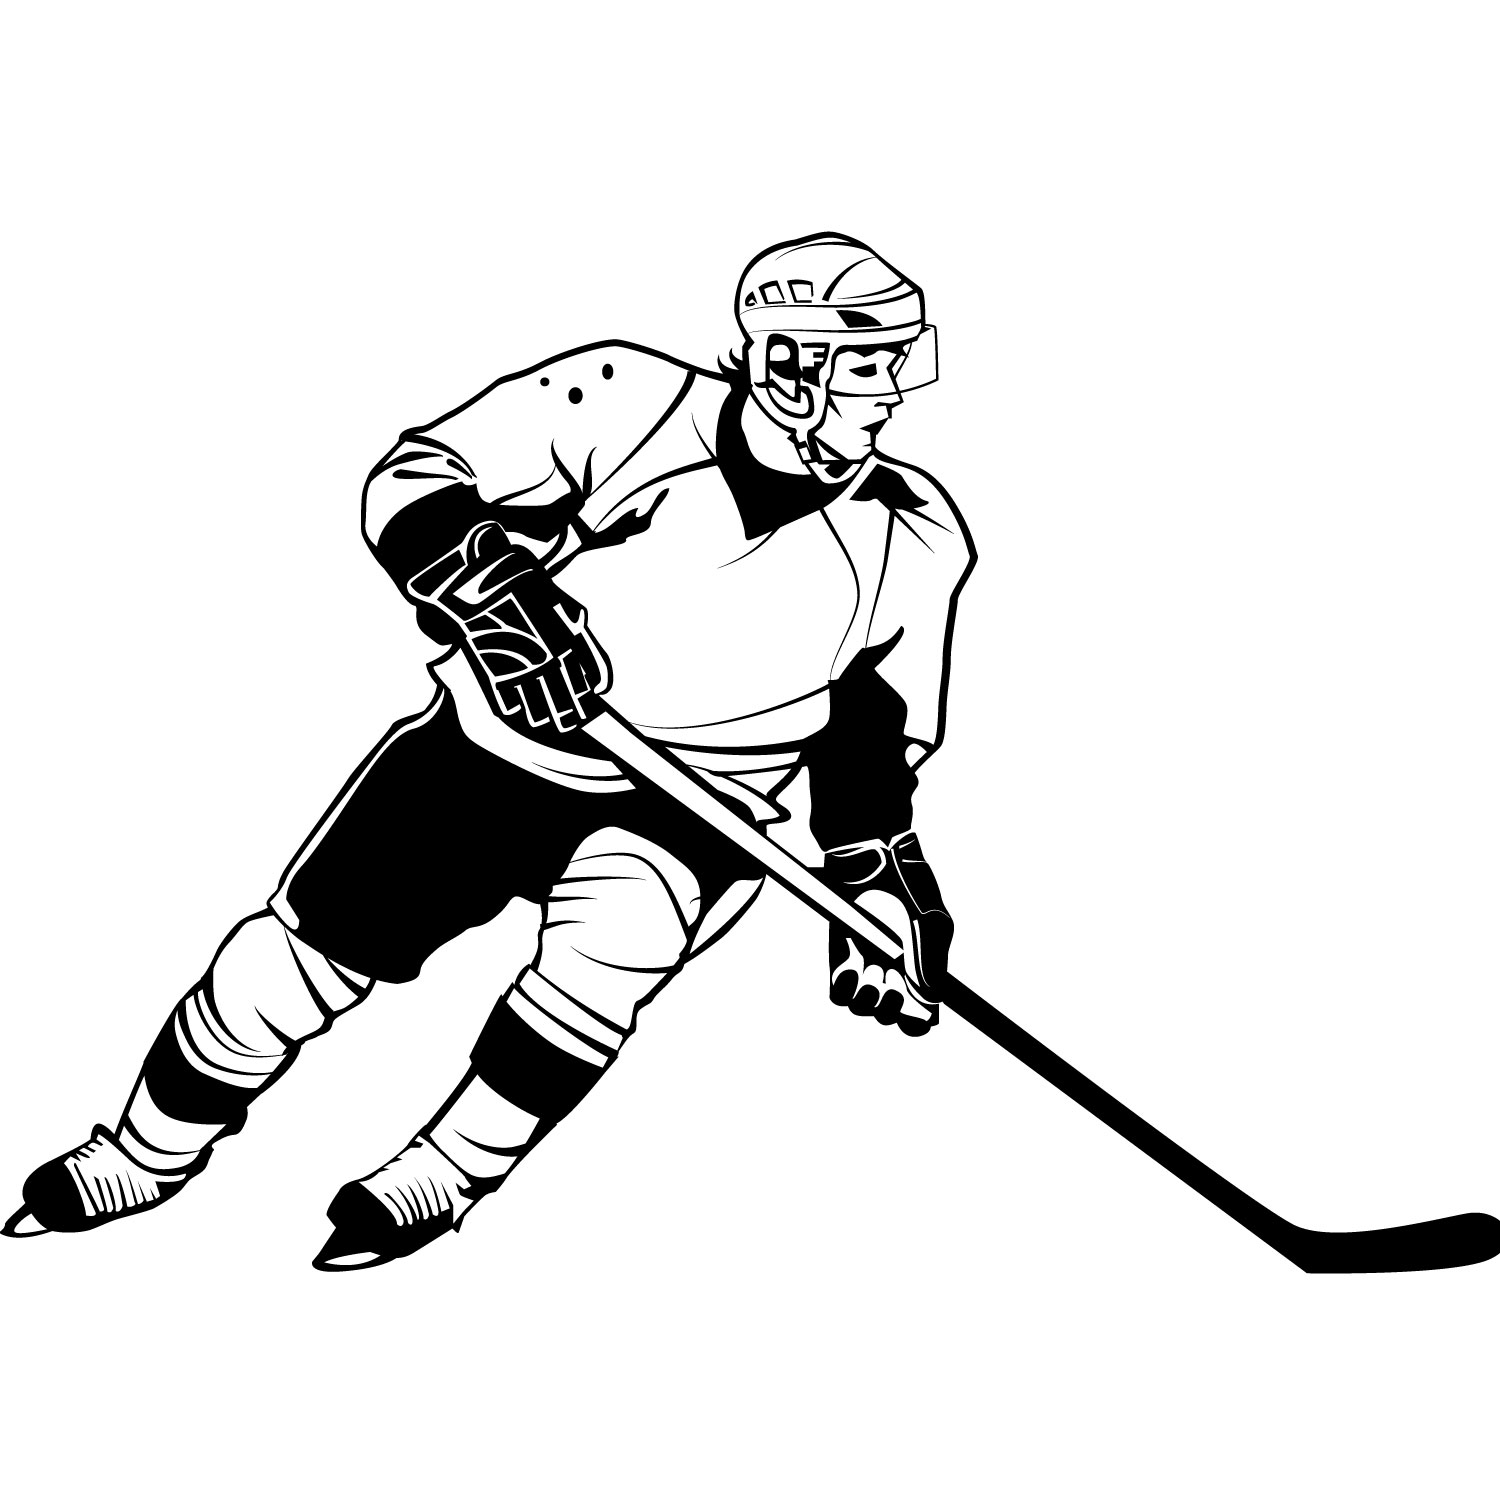 Hockey clipart black and white